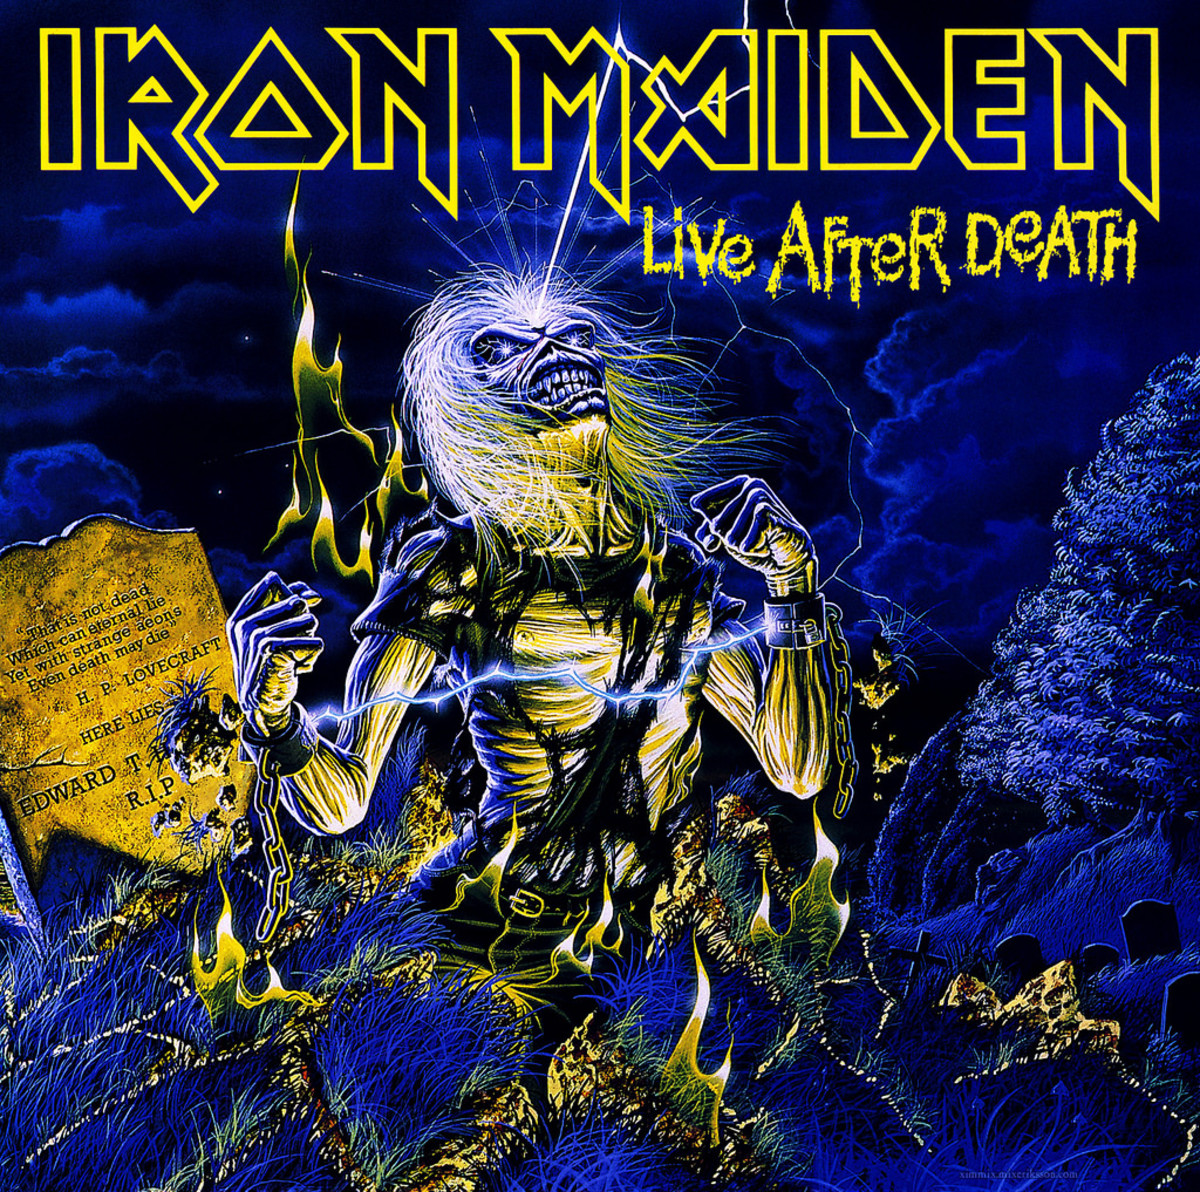 Iron Maiden "Live After Death" EMI Records  1C 2LP 162 12" 2 LP Set Vinyl Record Holland Pressing (1985) Album Cover Art by Derek Riggs